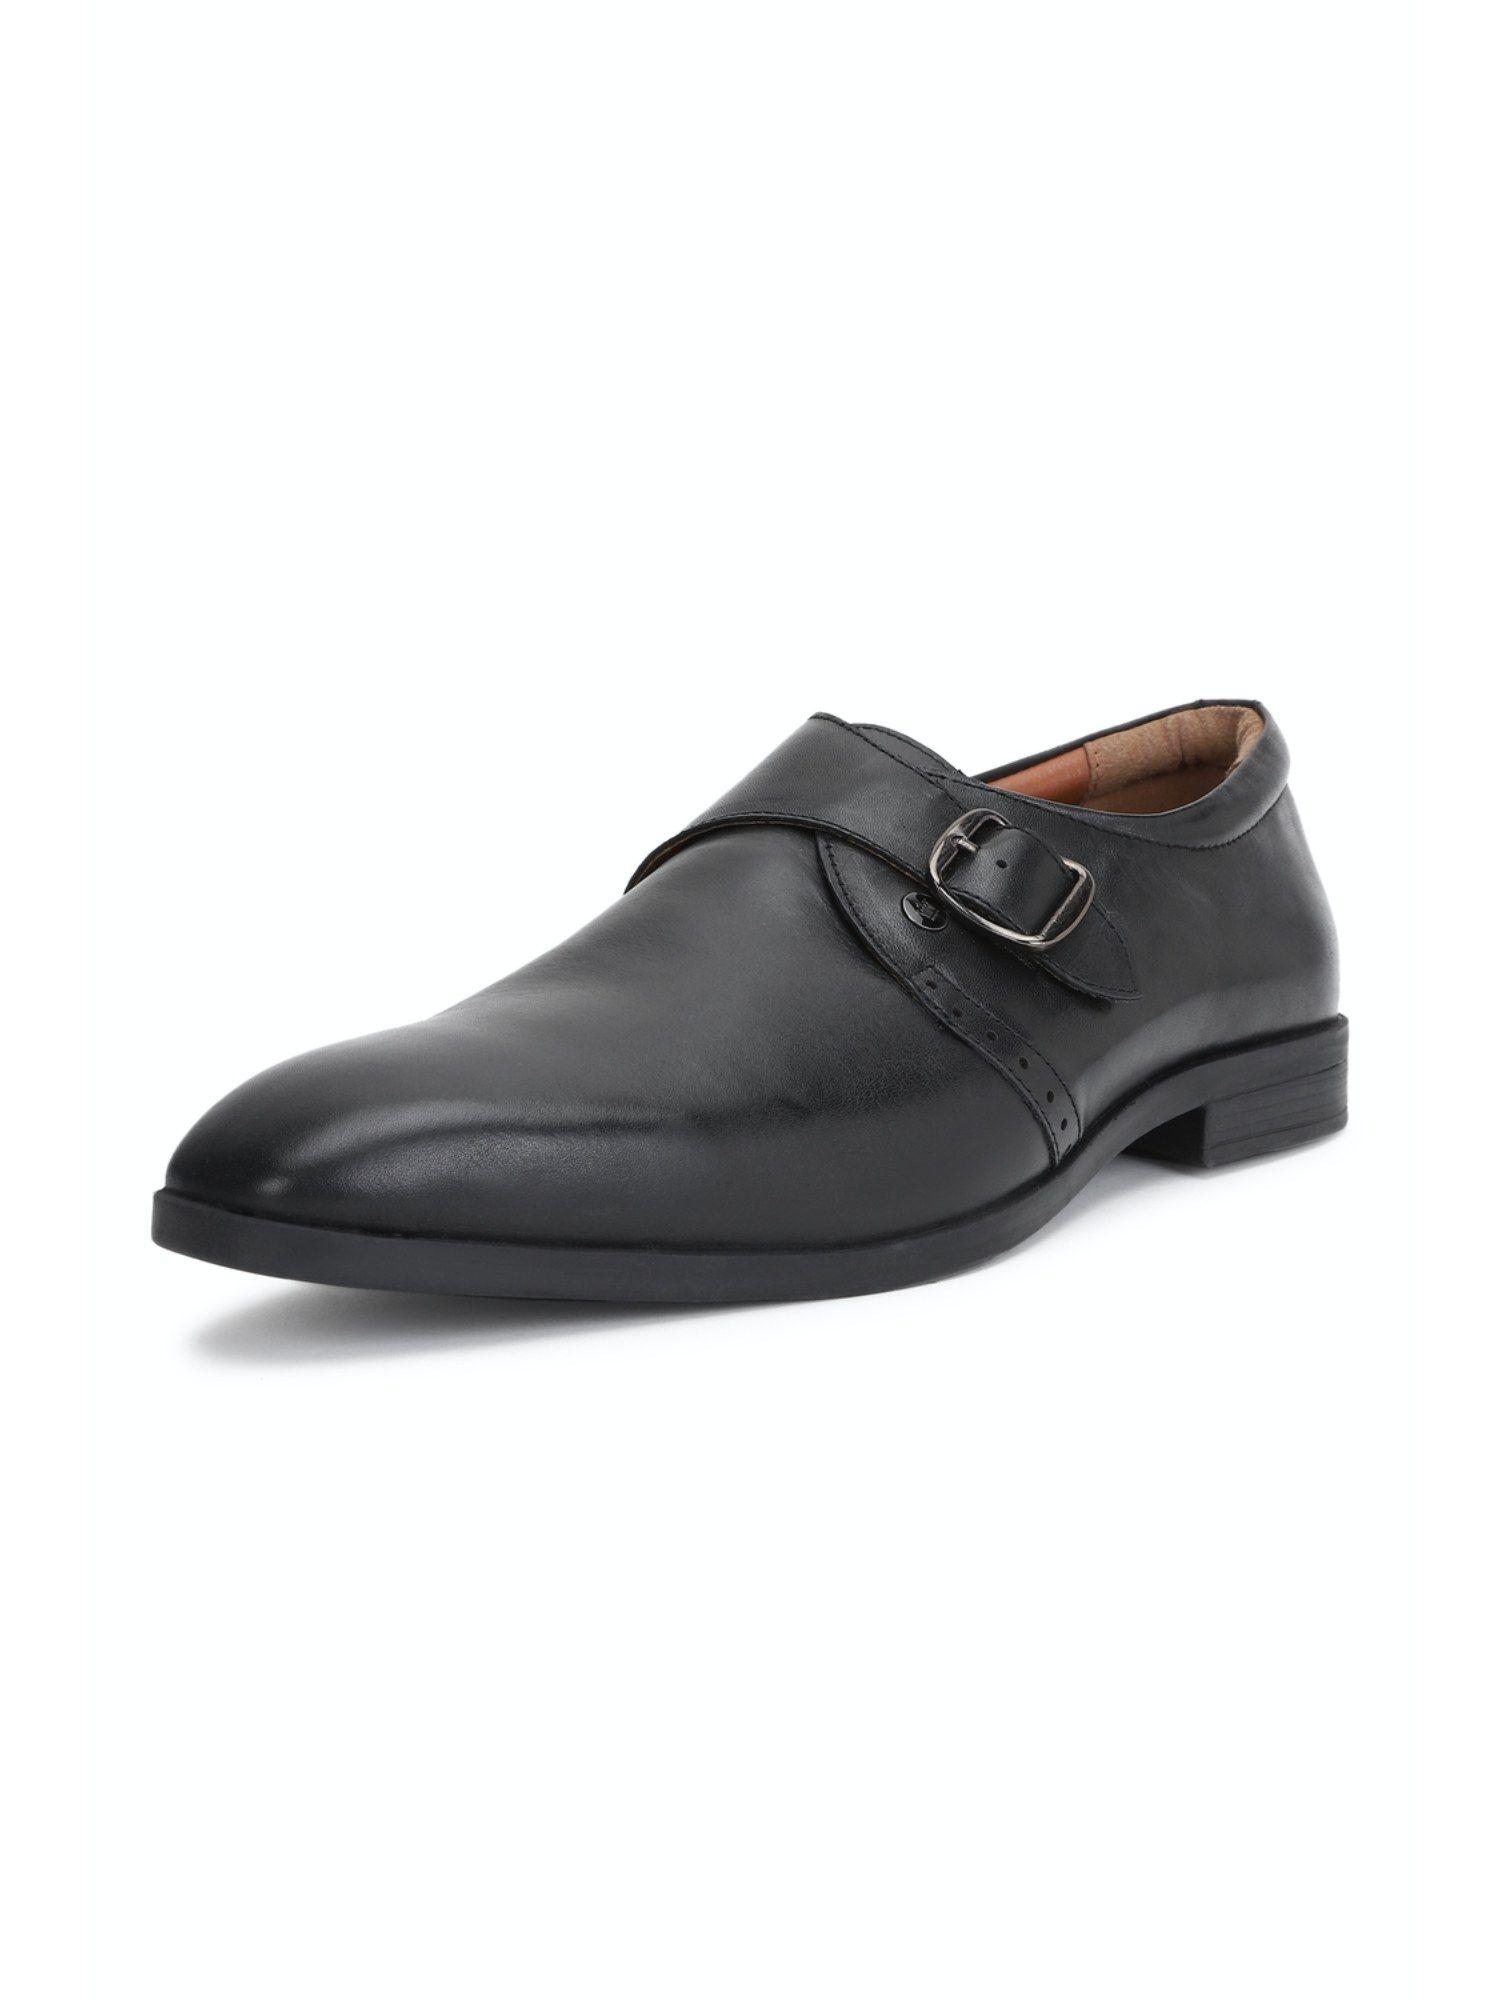 black formal monk strap shoes